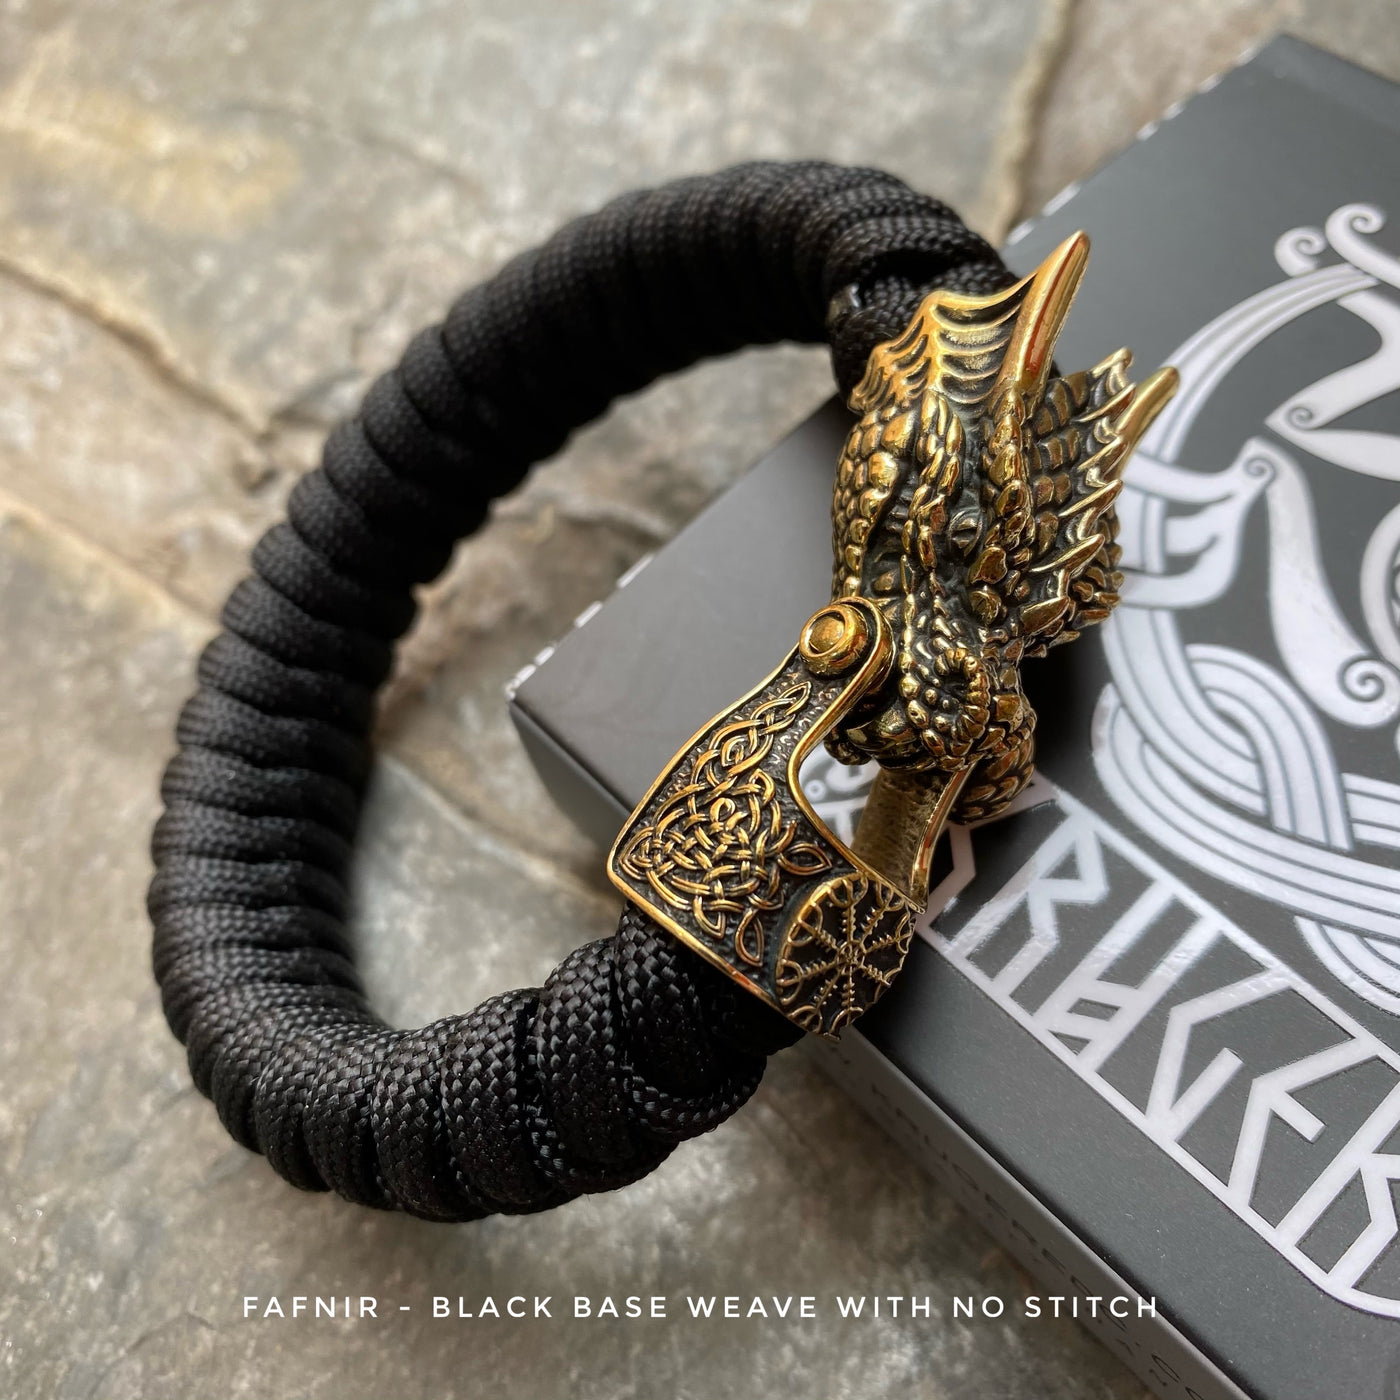 The Great Fafnir dragon bracelet